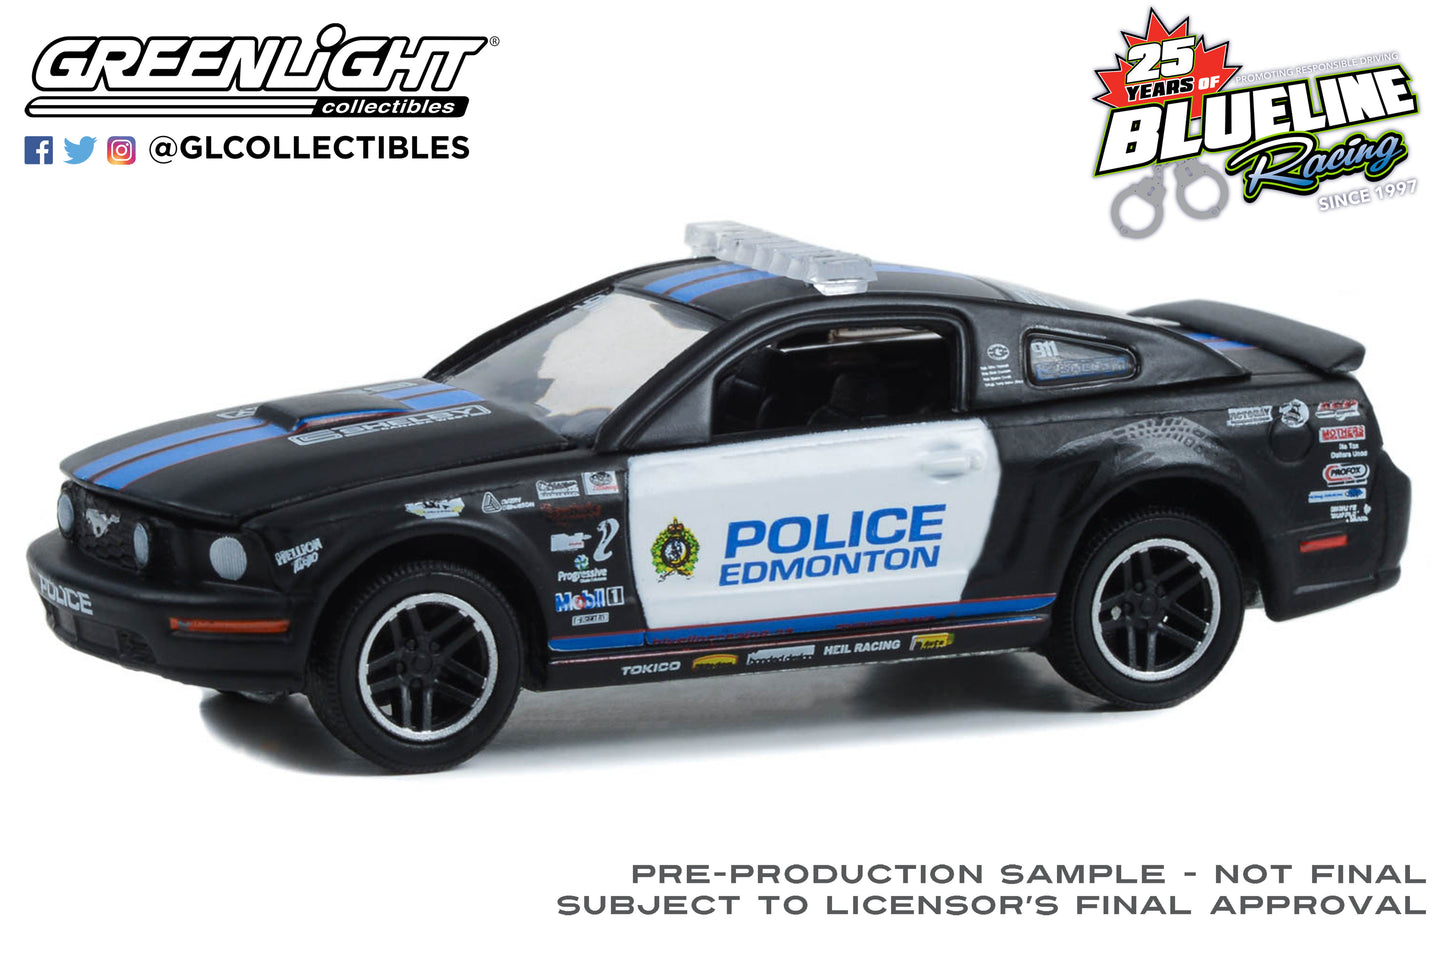 GreenLight 1:64 2009 Ford Mustang GT - Edmonton Police, Edmonton, Alberta, Canada - Blue Line Racing 25 Years 30370